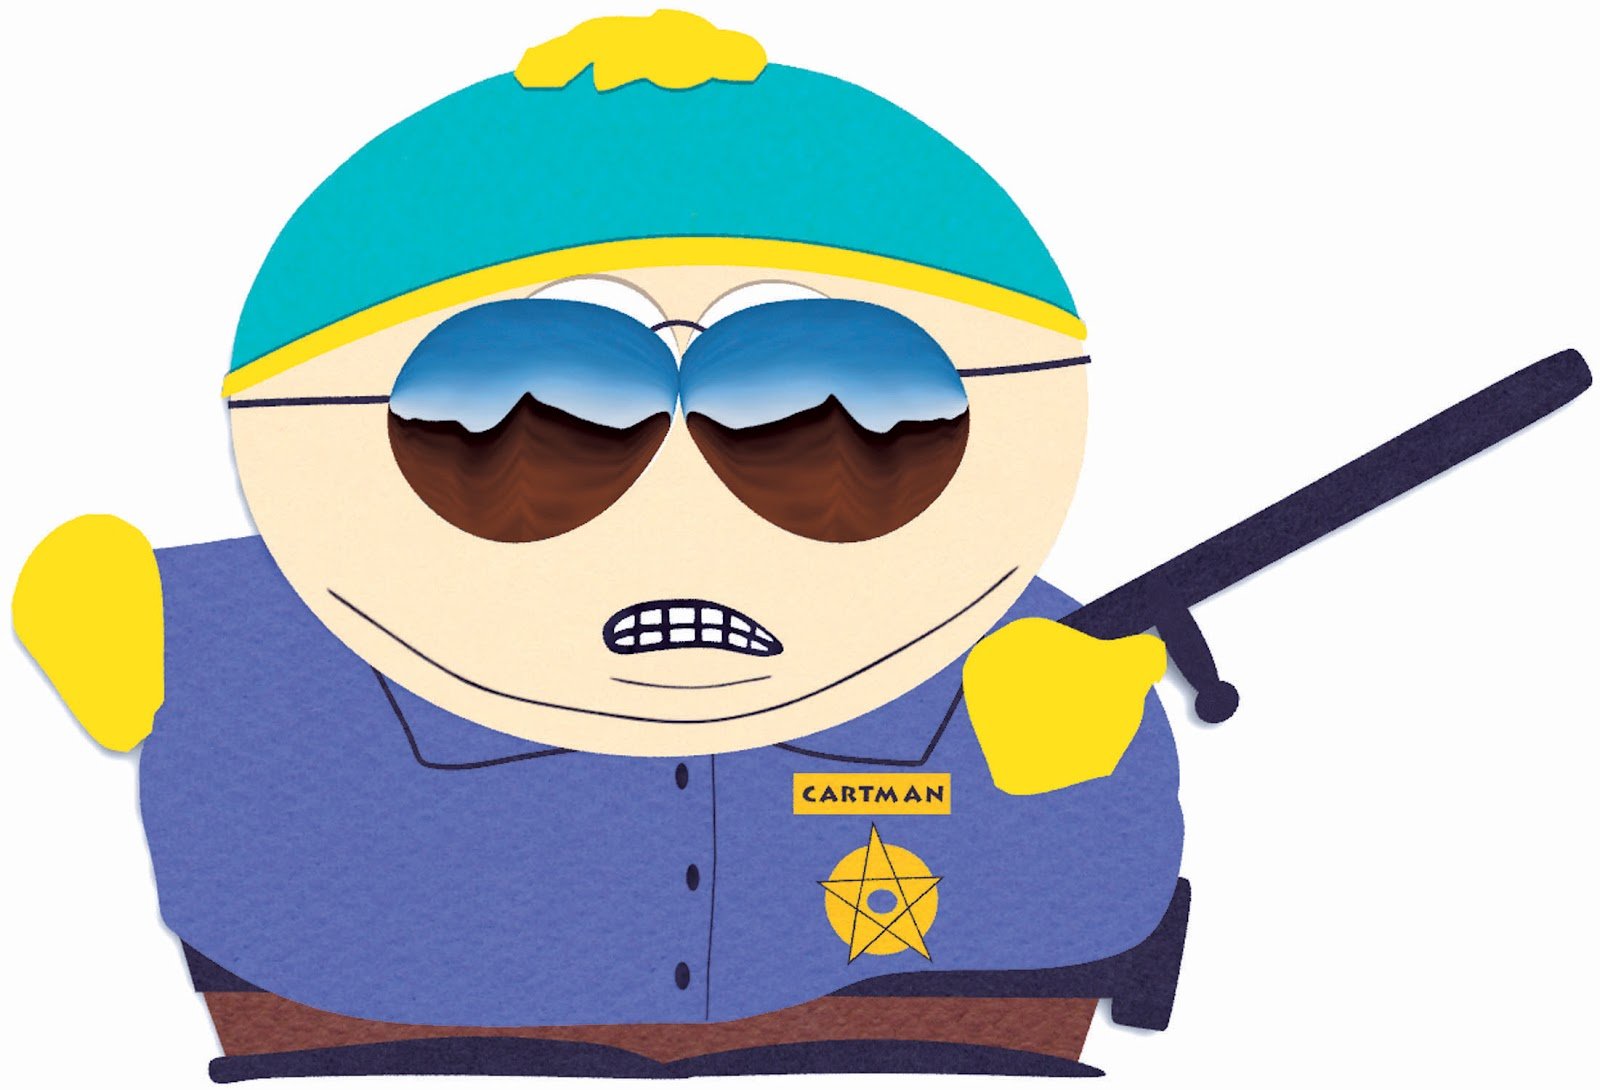 cartman 911 presentation episode